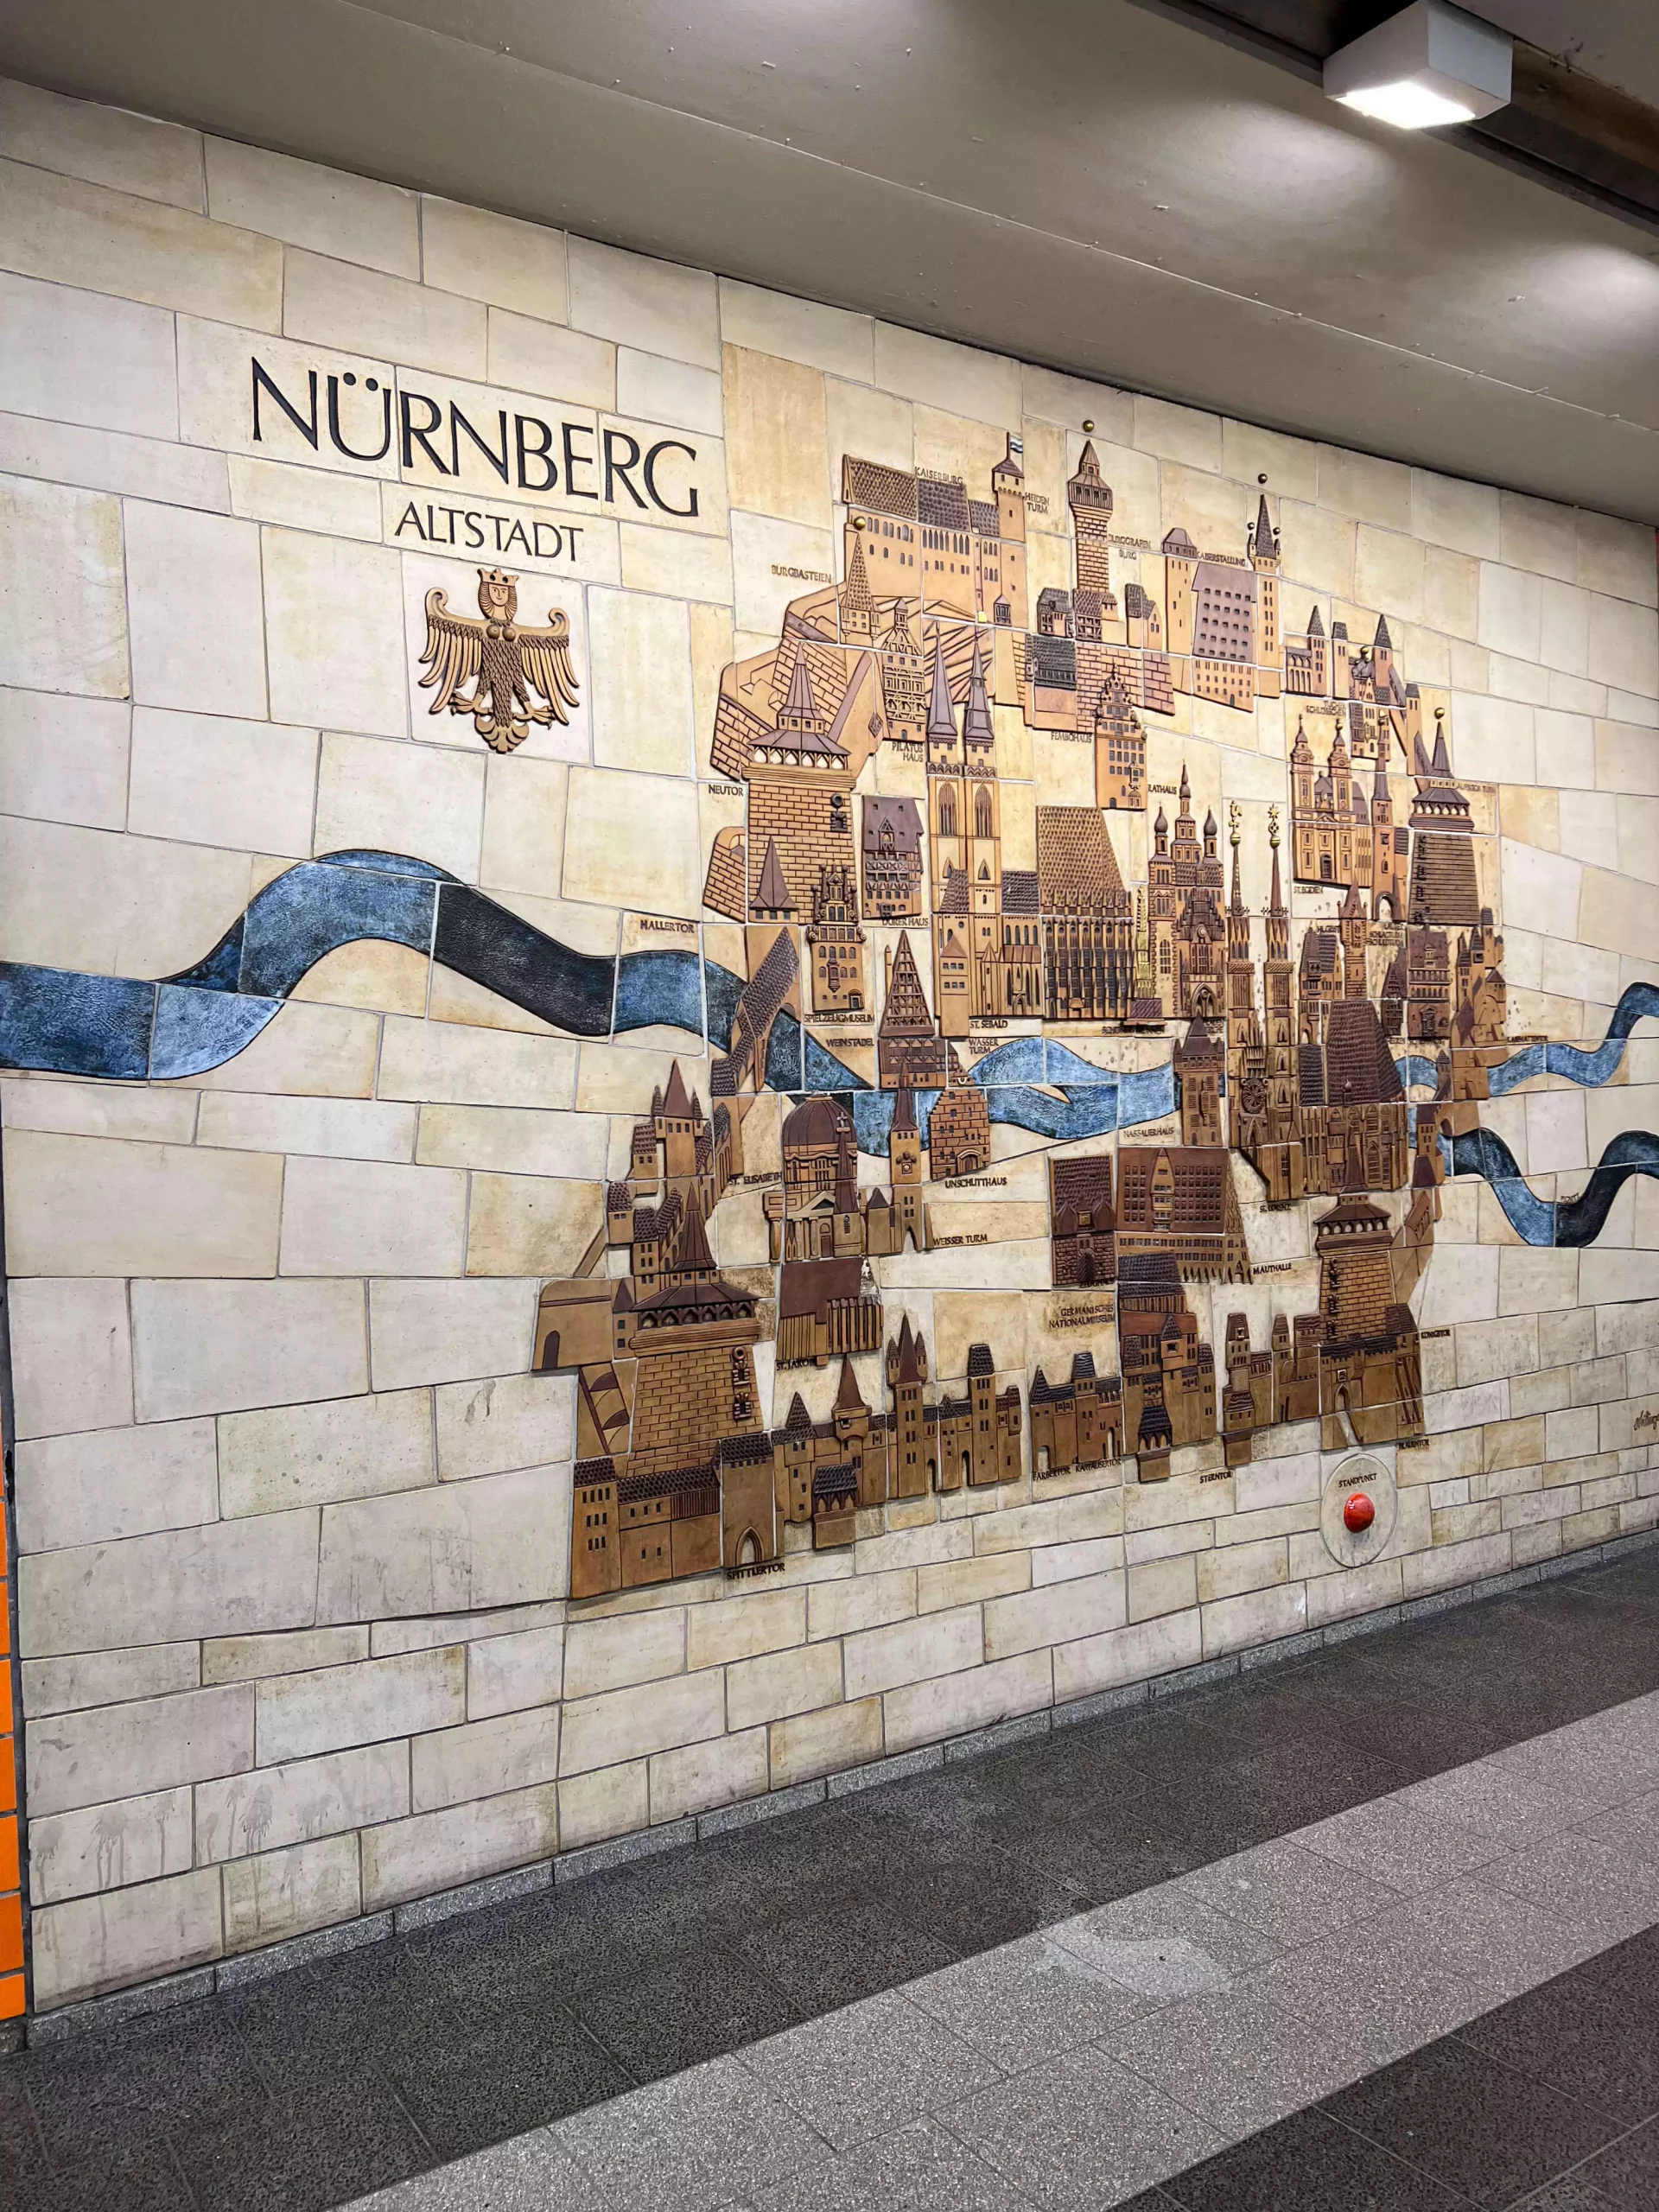 Nuremberg Train Station